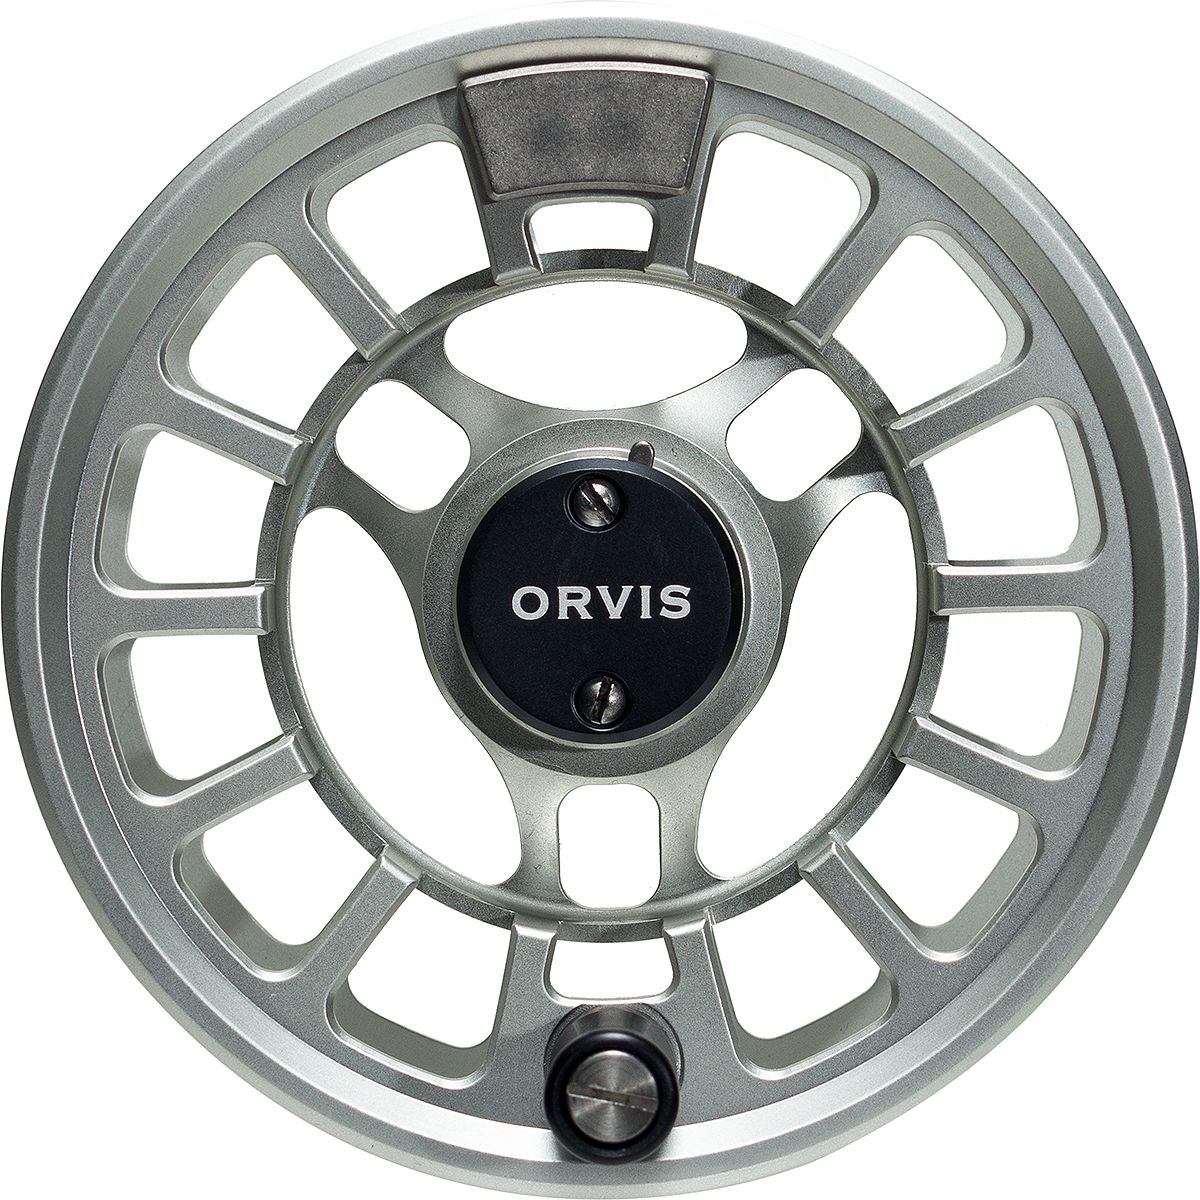 Orvis: The new Hydros II Euro Reel.